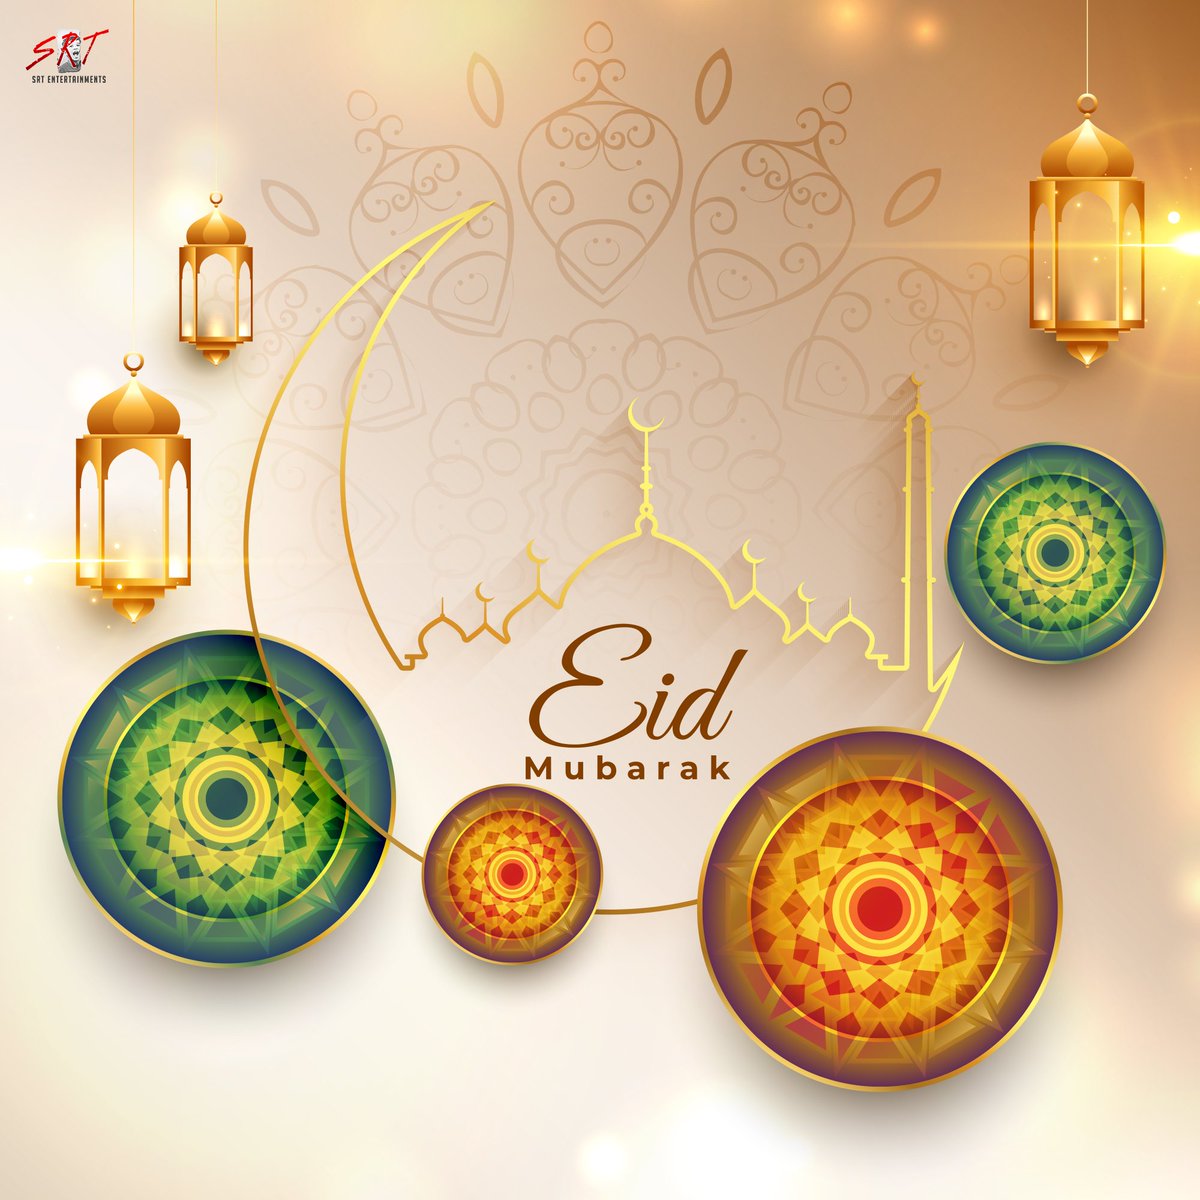 May the festive bring you happiness and peace. Eid al-Adha Mubarak